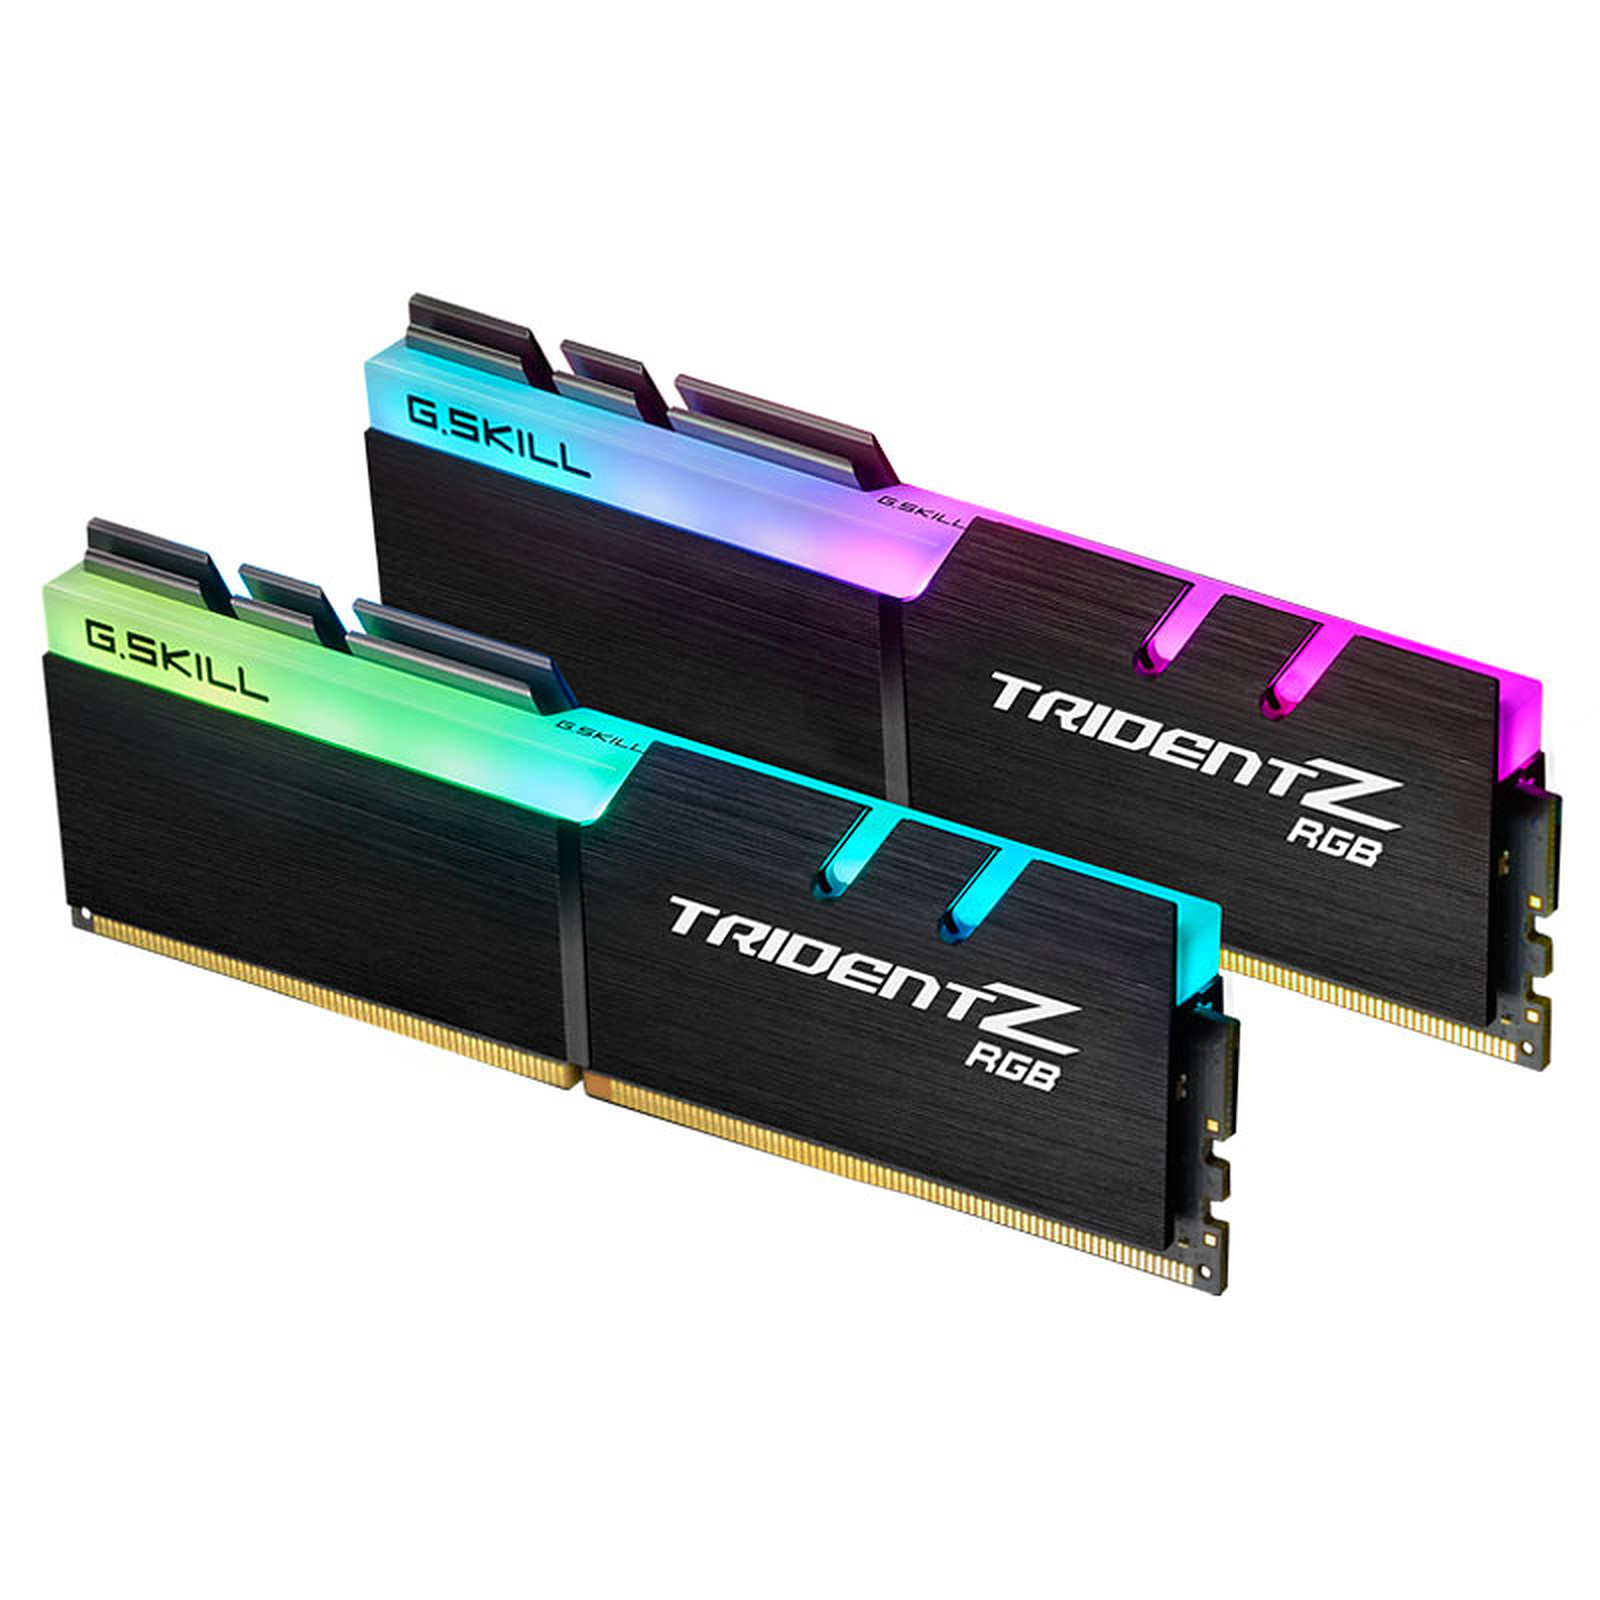 Память оперативная DDR4 G.Skill Trident Z RGB 16Gb (2x8Gb) 3200MHz (F4-3200C16D-16GTZR) память оперативная ddr4 g skill trident z 16gb 2x8gb 3200mhz f4 3200c16d 16gtzkw